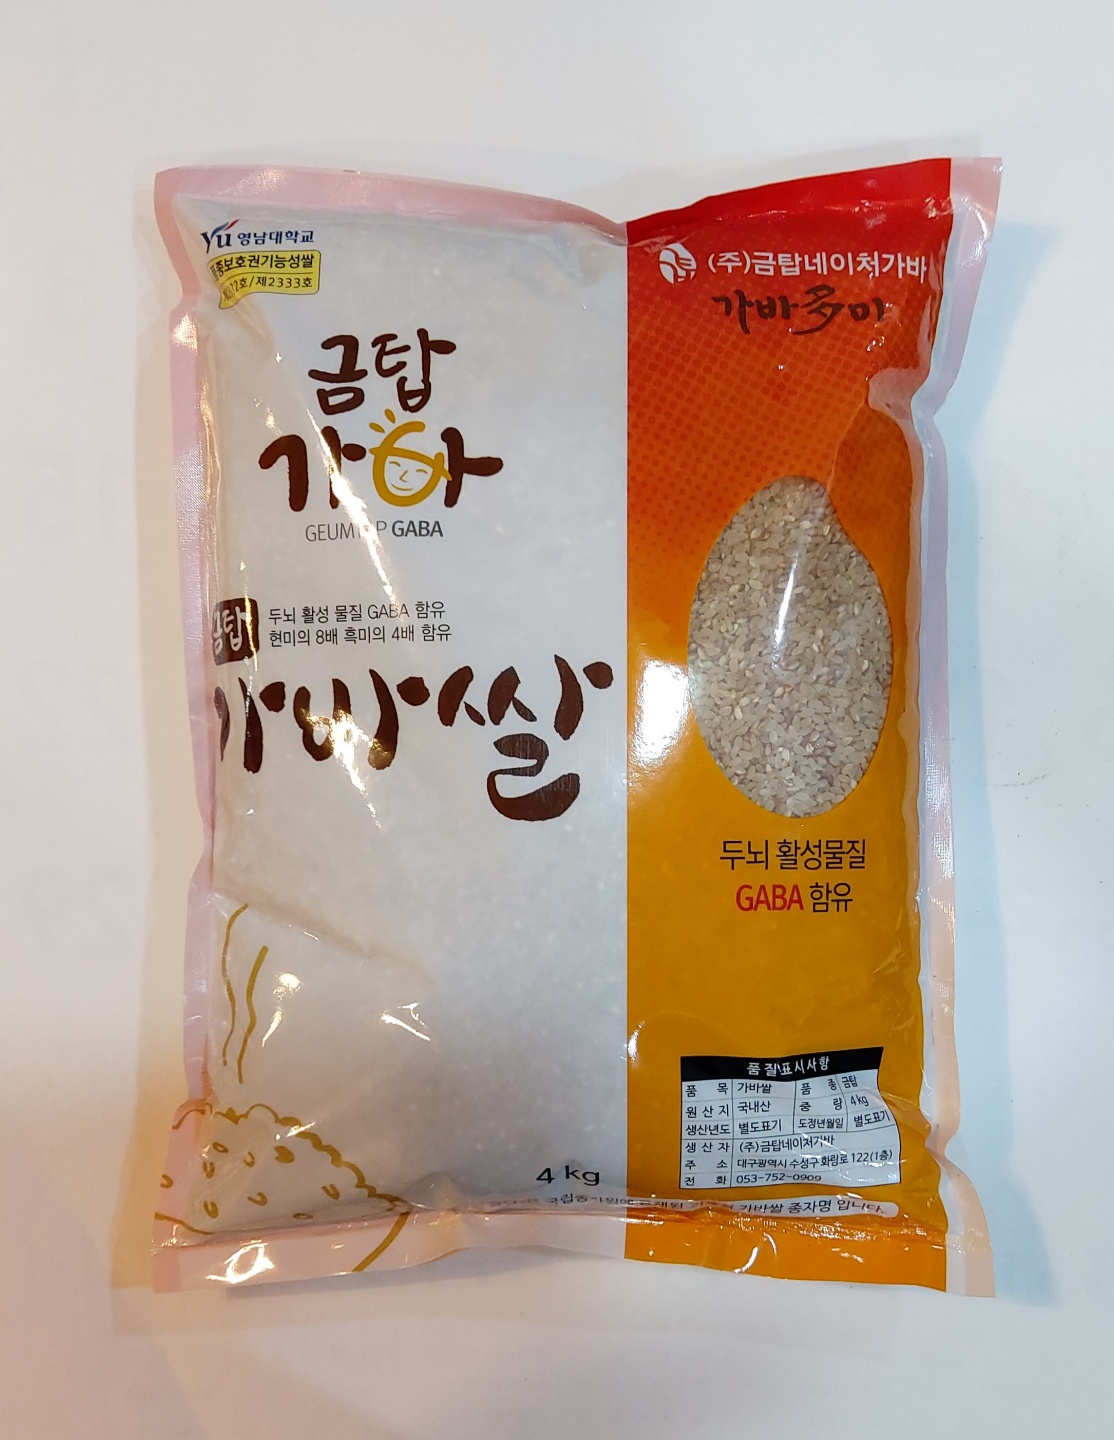 4kg 금탑가바 (현미/쌀/찰현미)